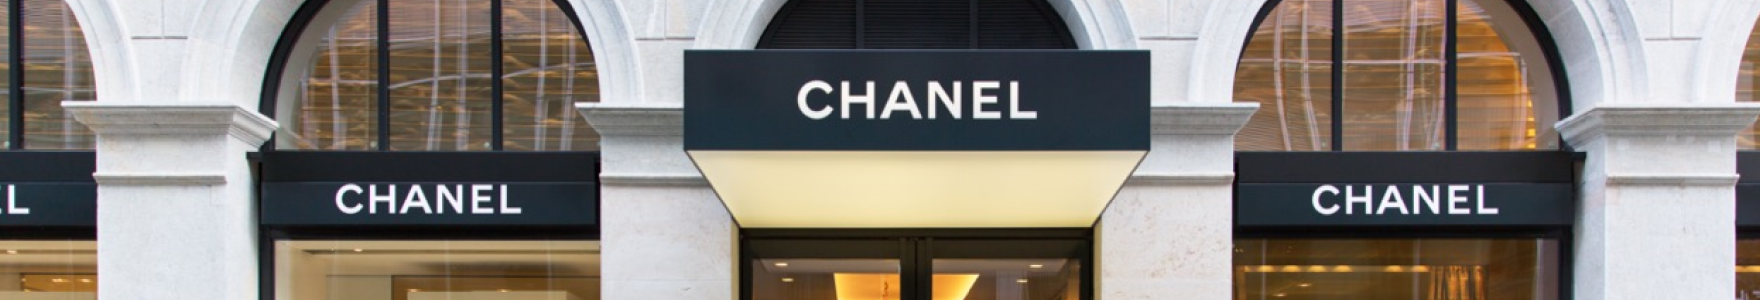 Chanel 背景